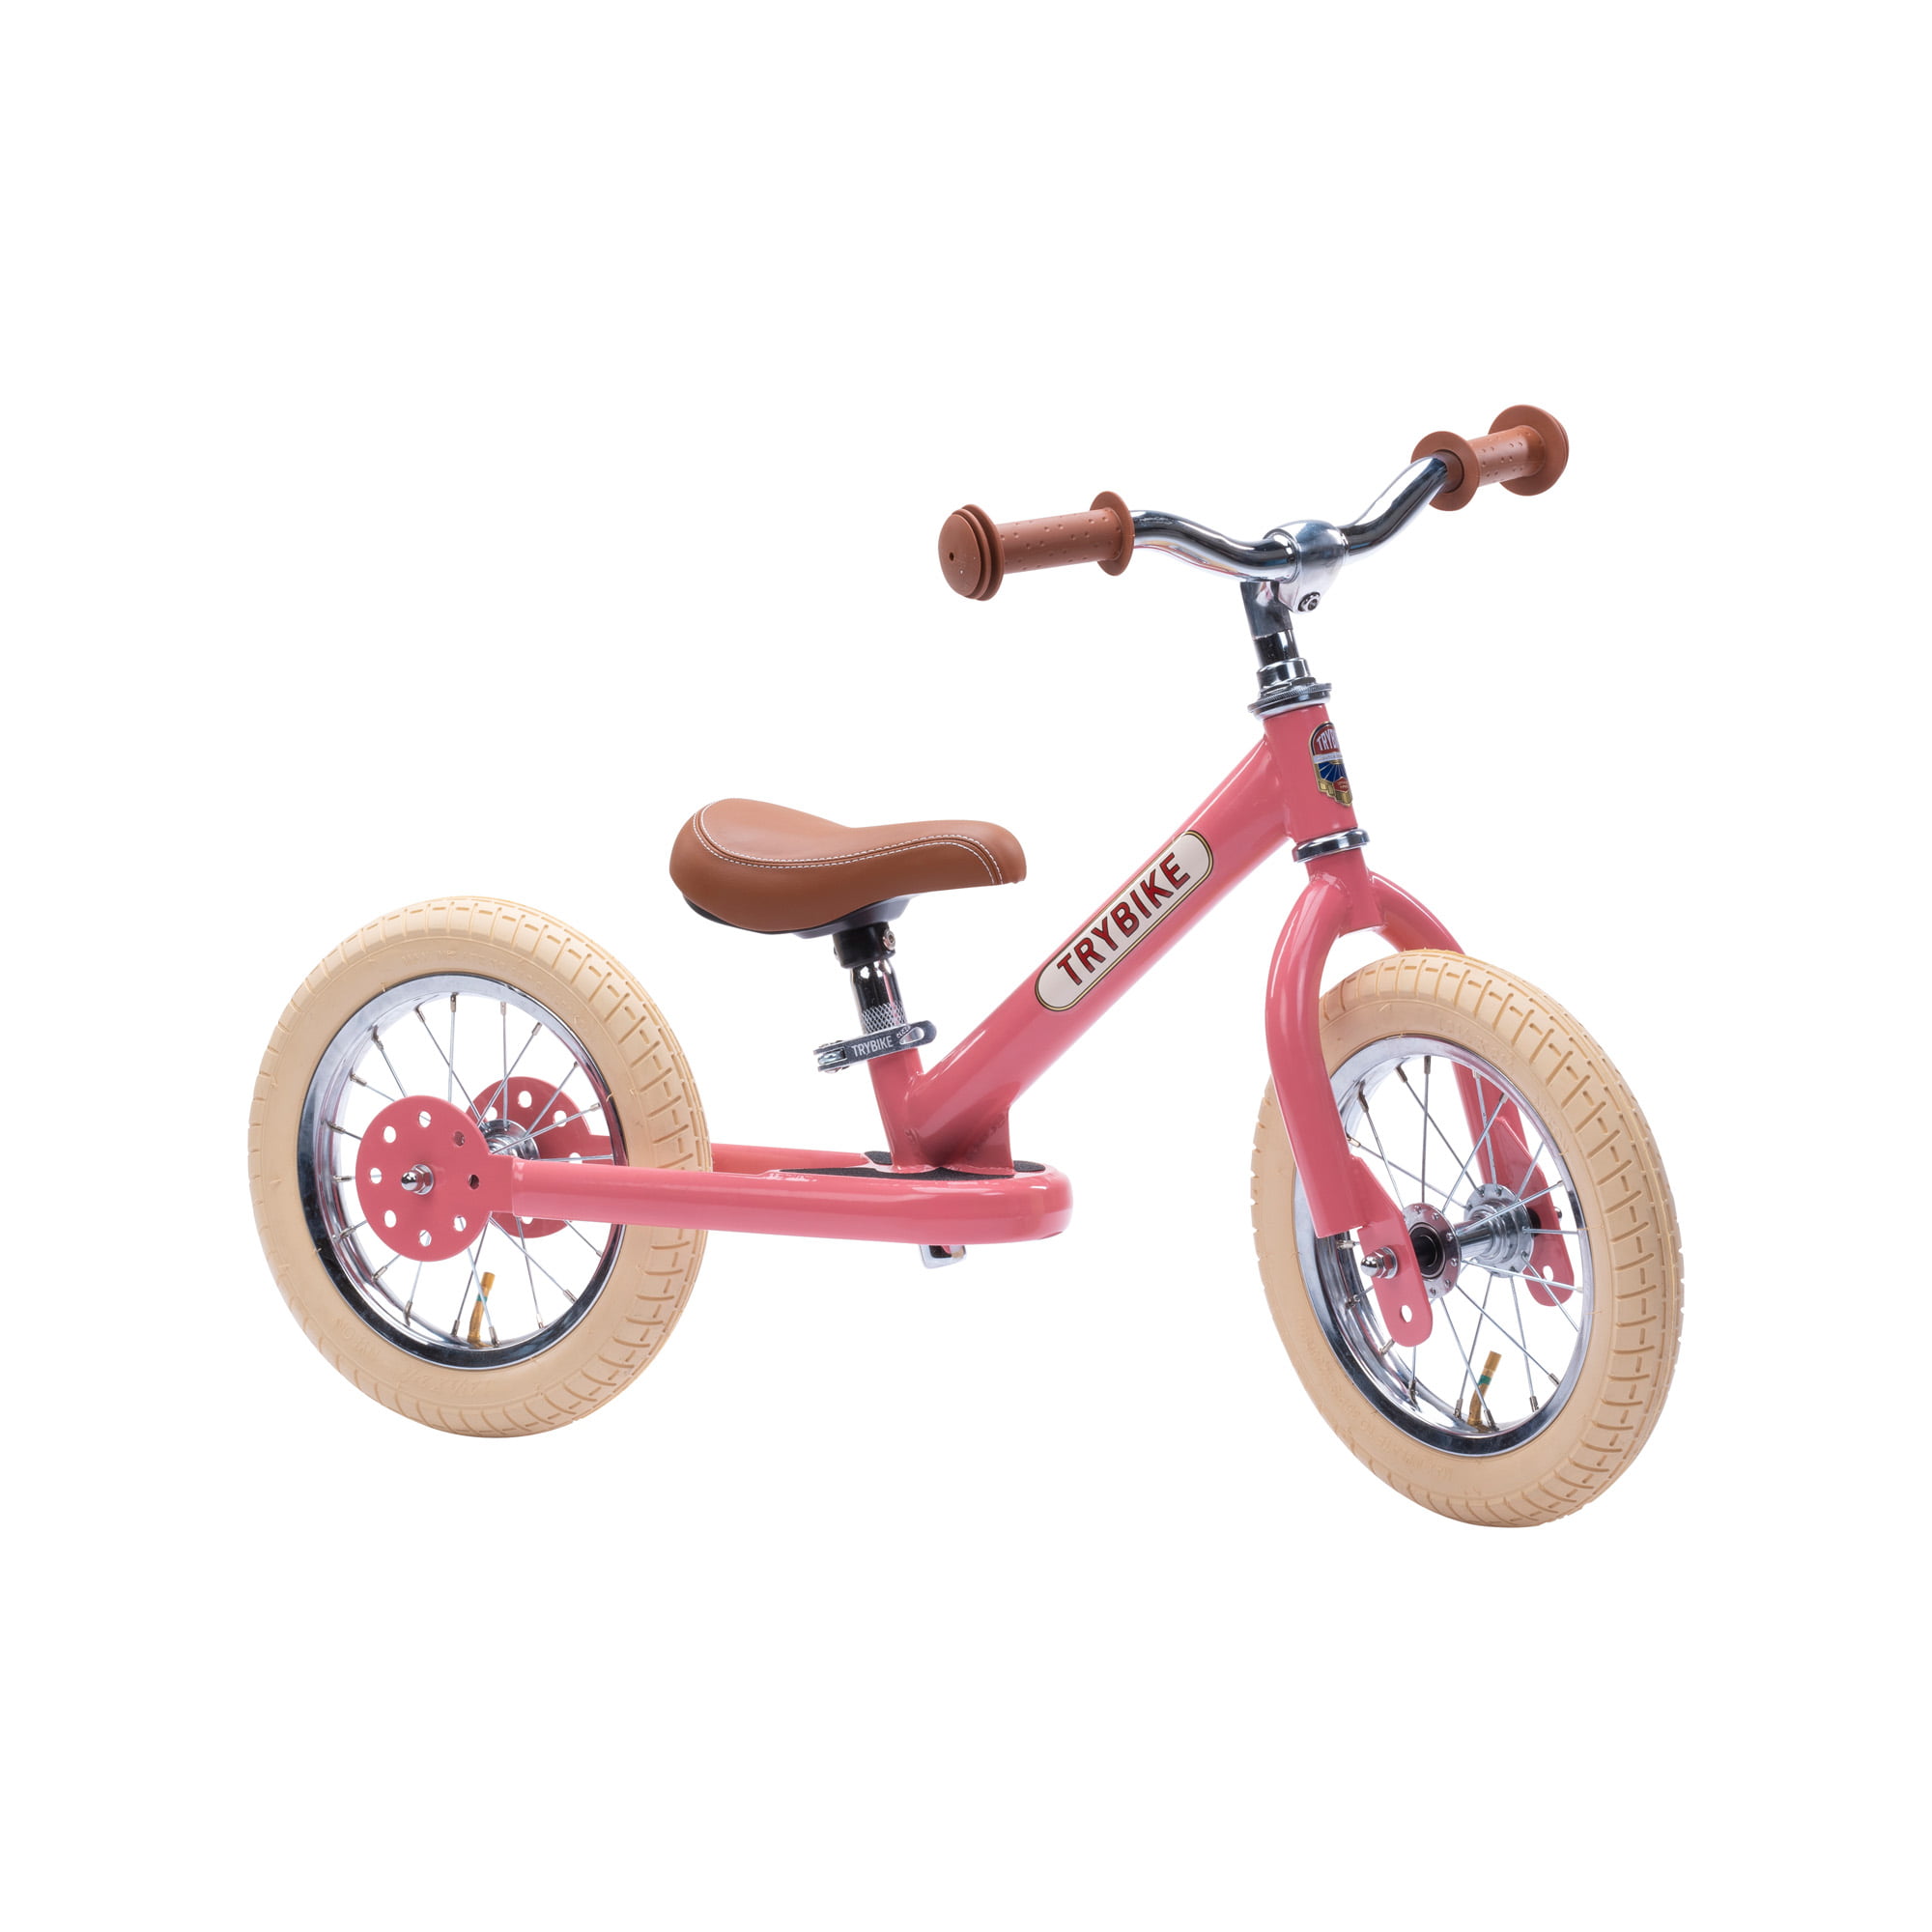 Trybike steel balance bike – Vintage Pink